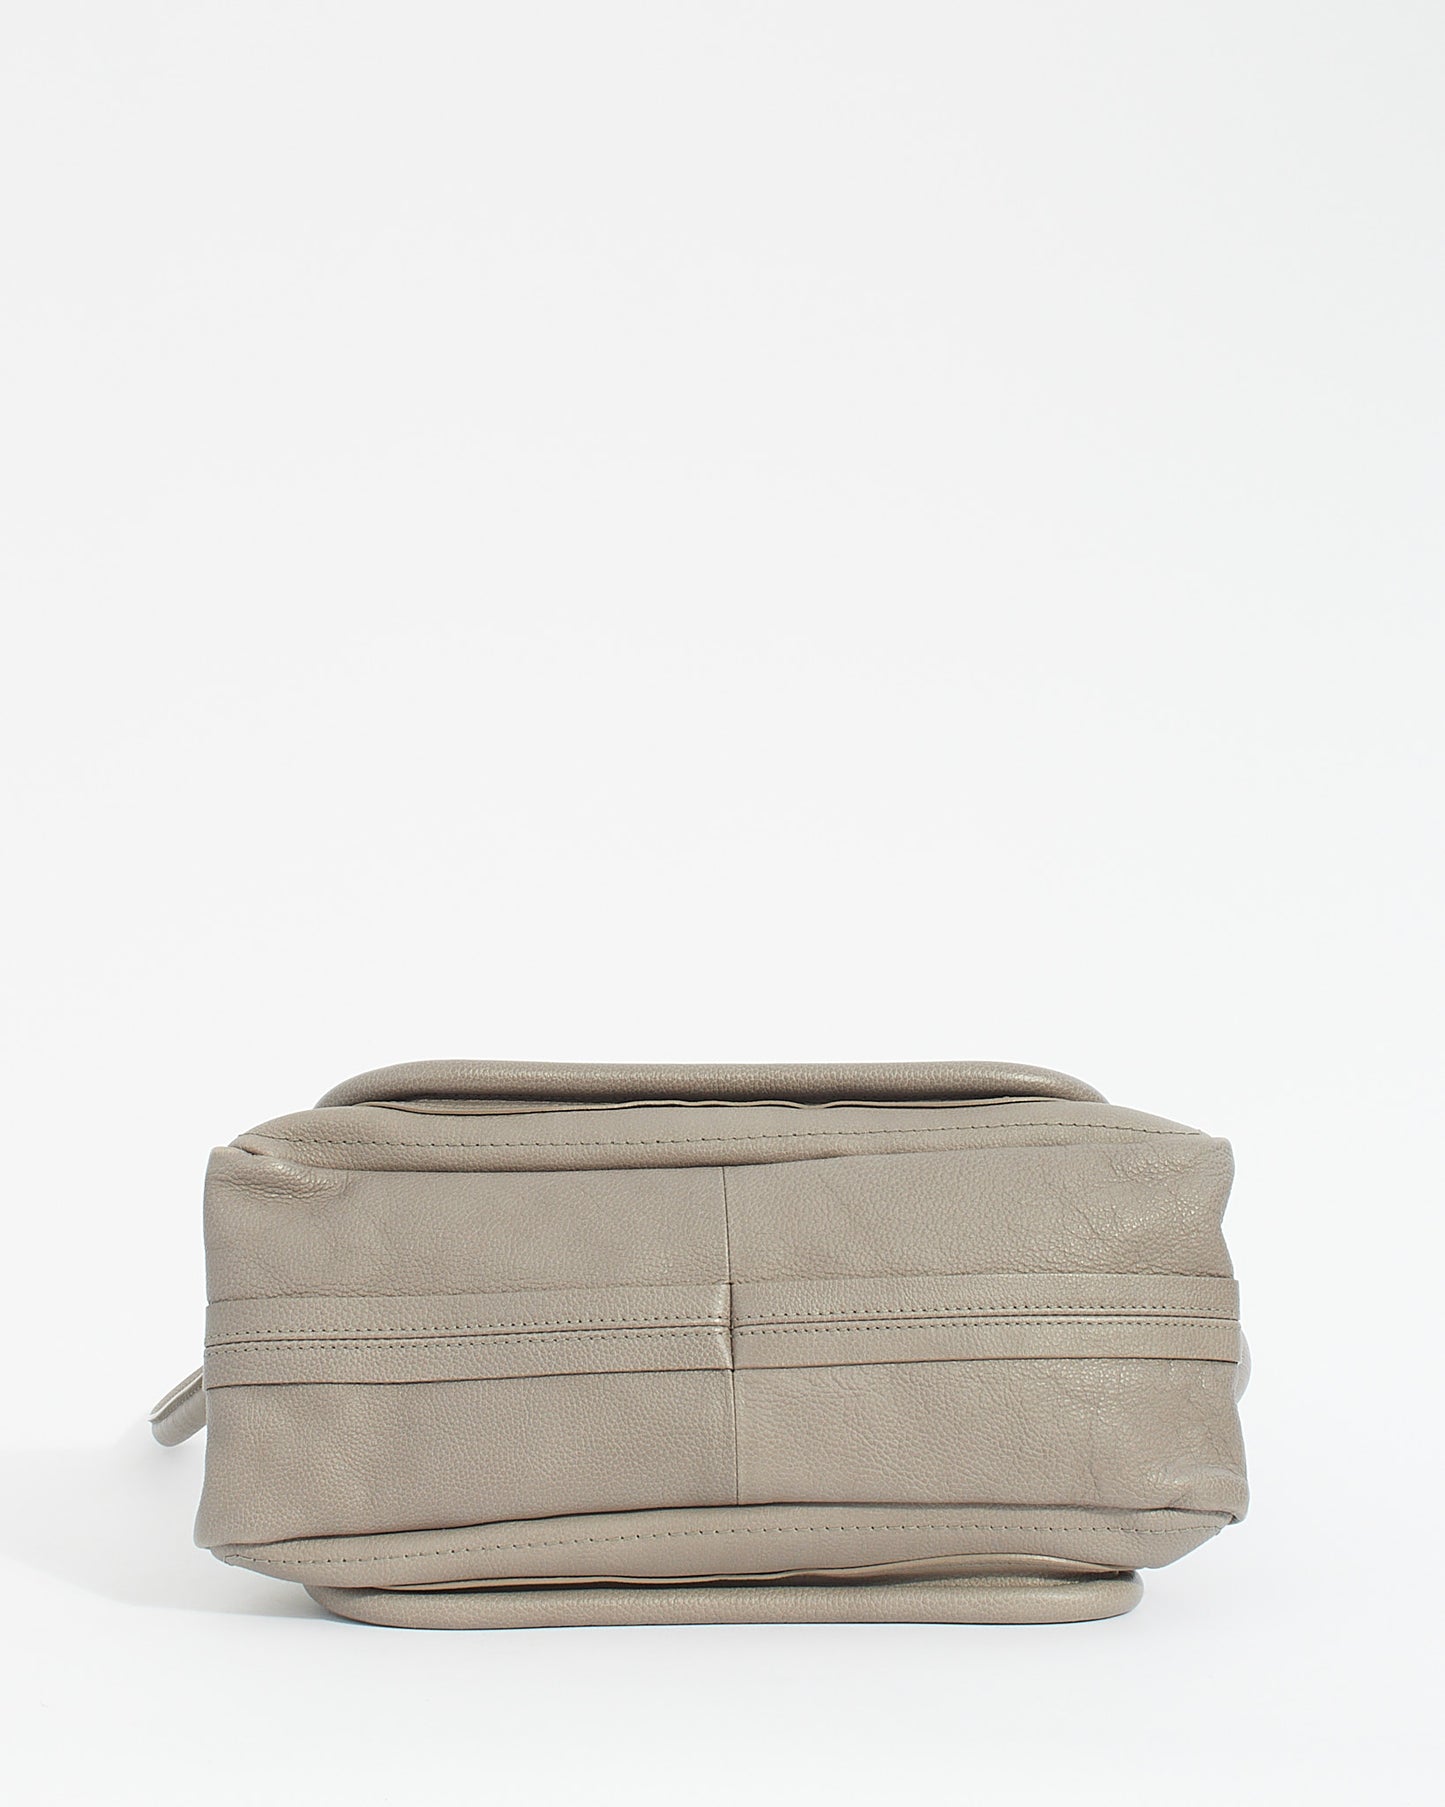 Chloé Grey Leather Medium Paraty Shoulder Bag